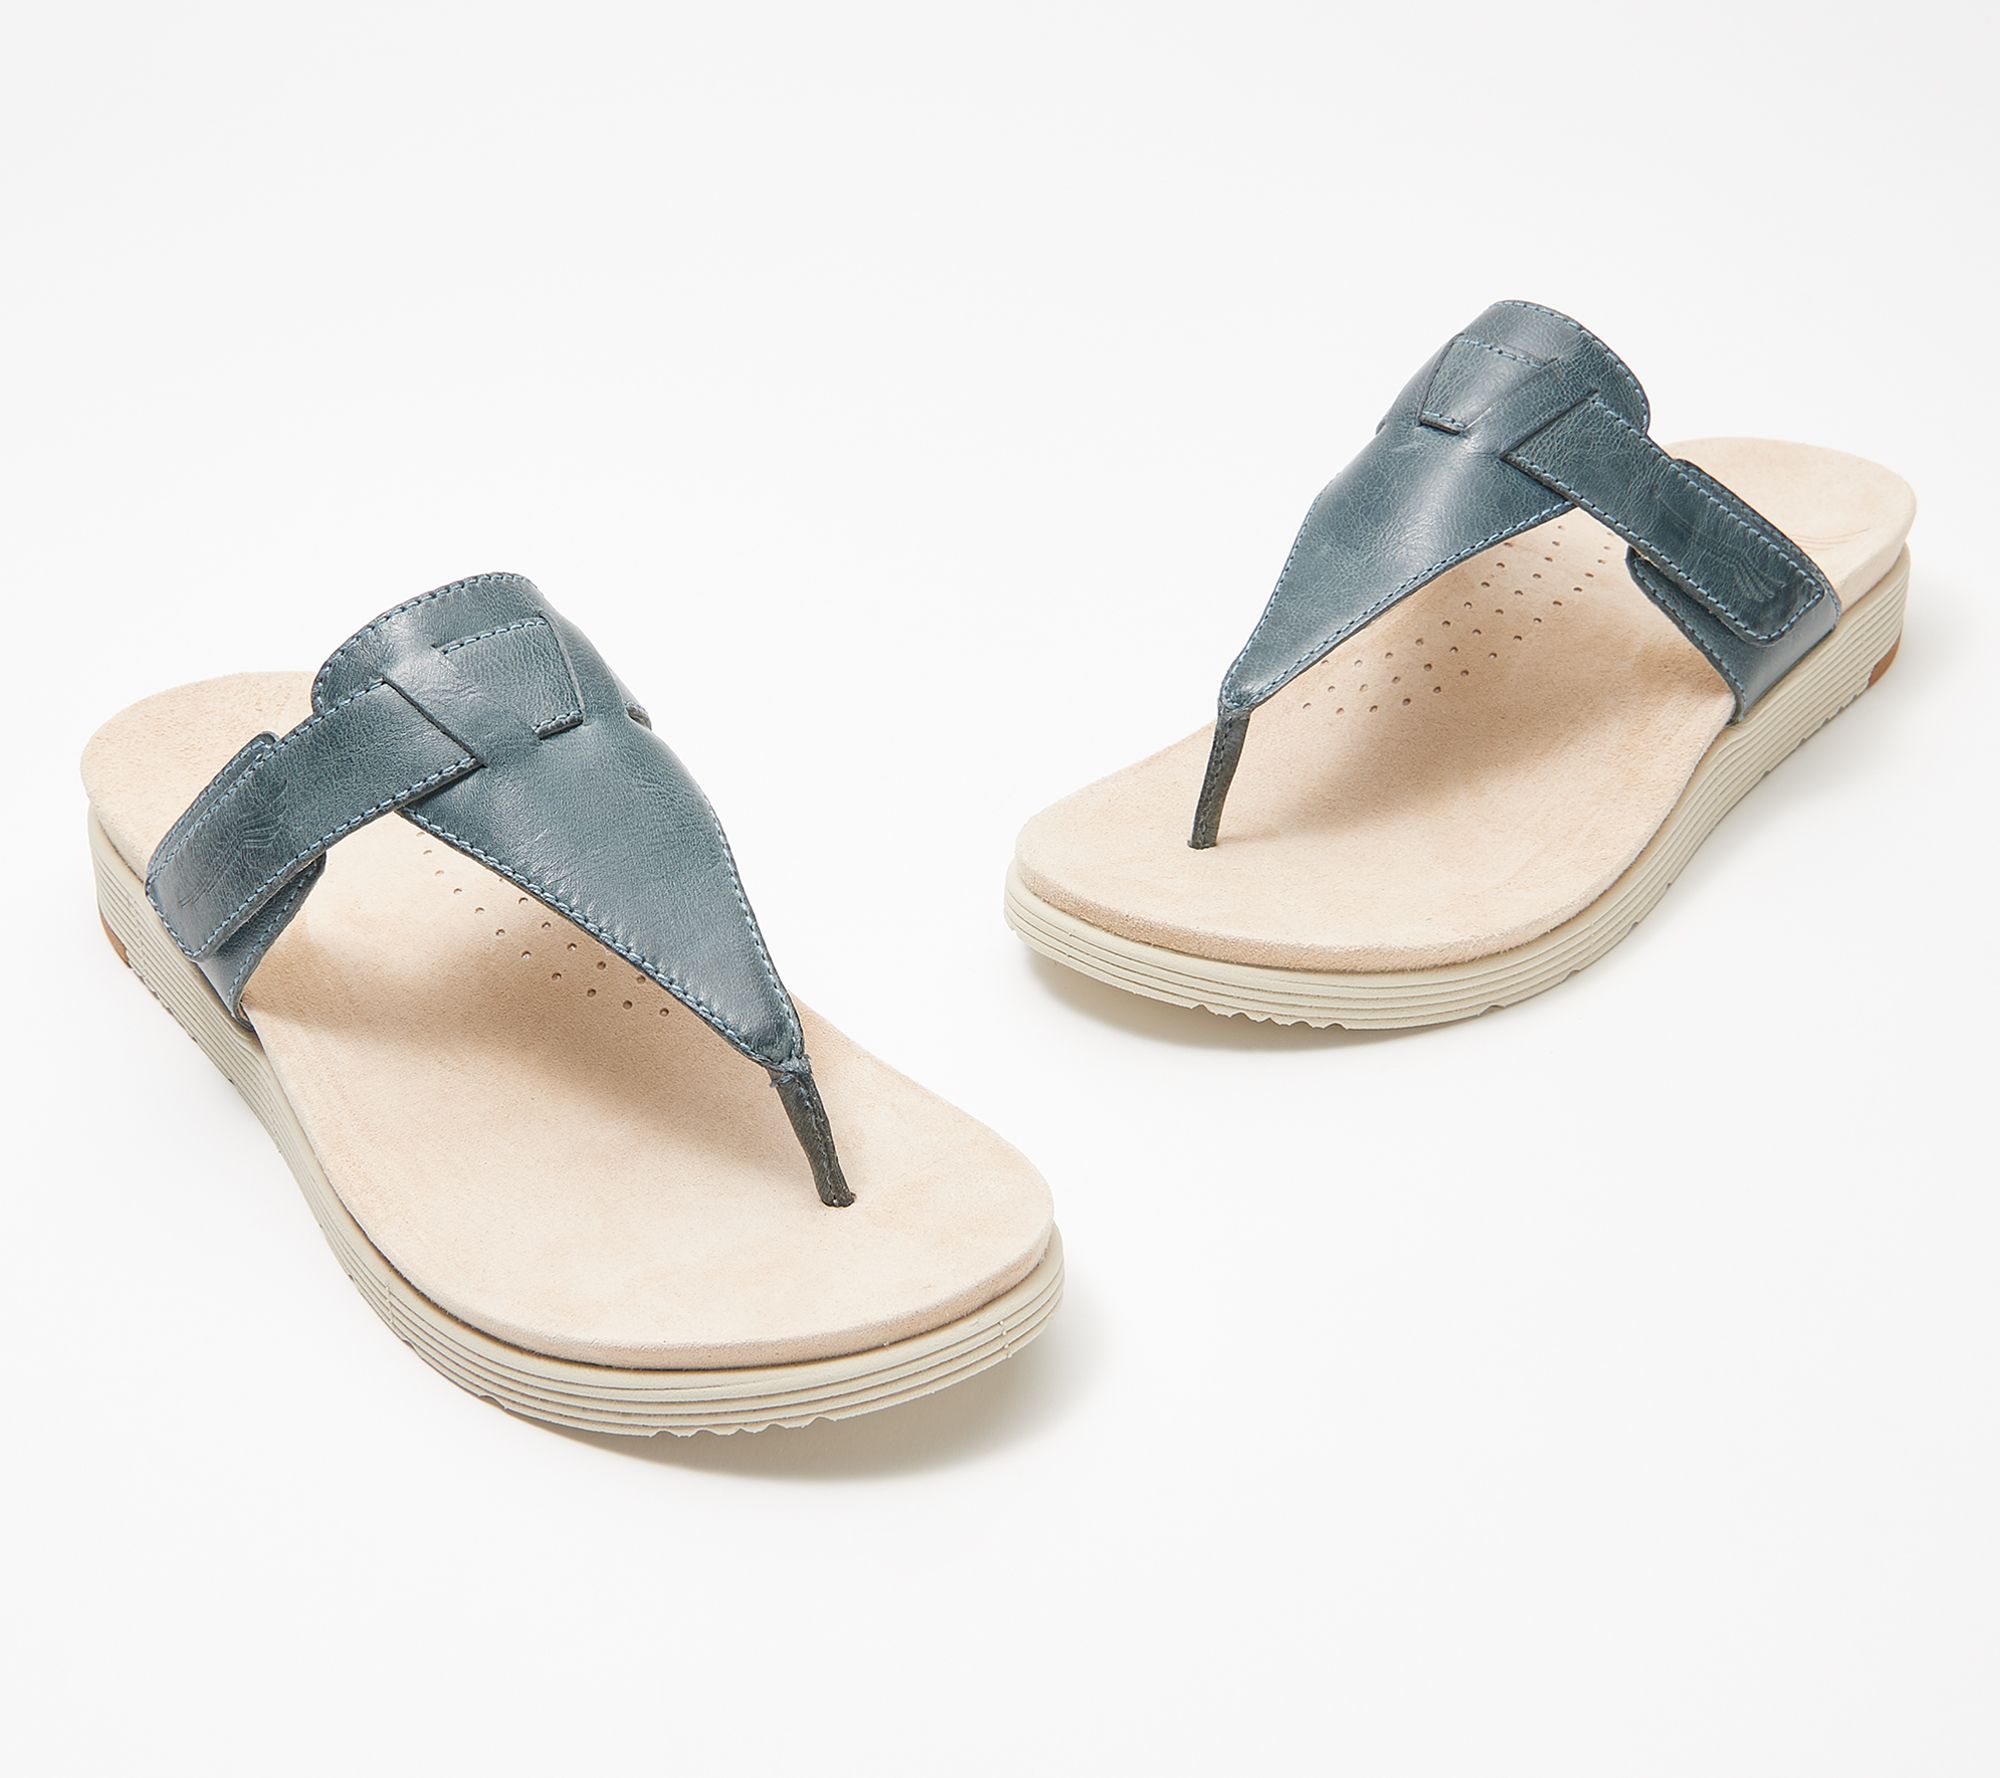 Dansko Burnished Calf Leather Thong Sandals - Cece - QVC.com